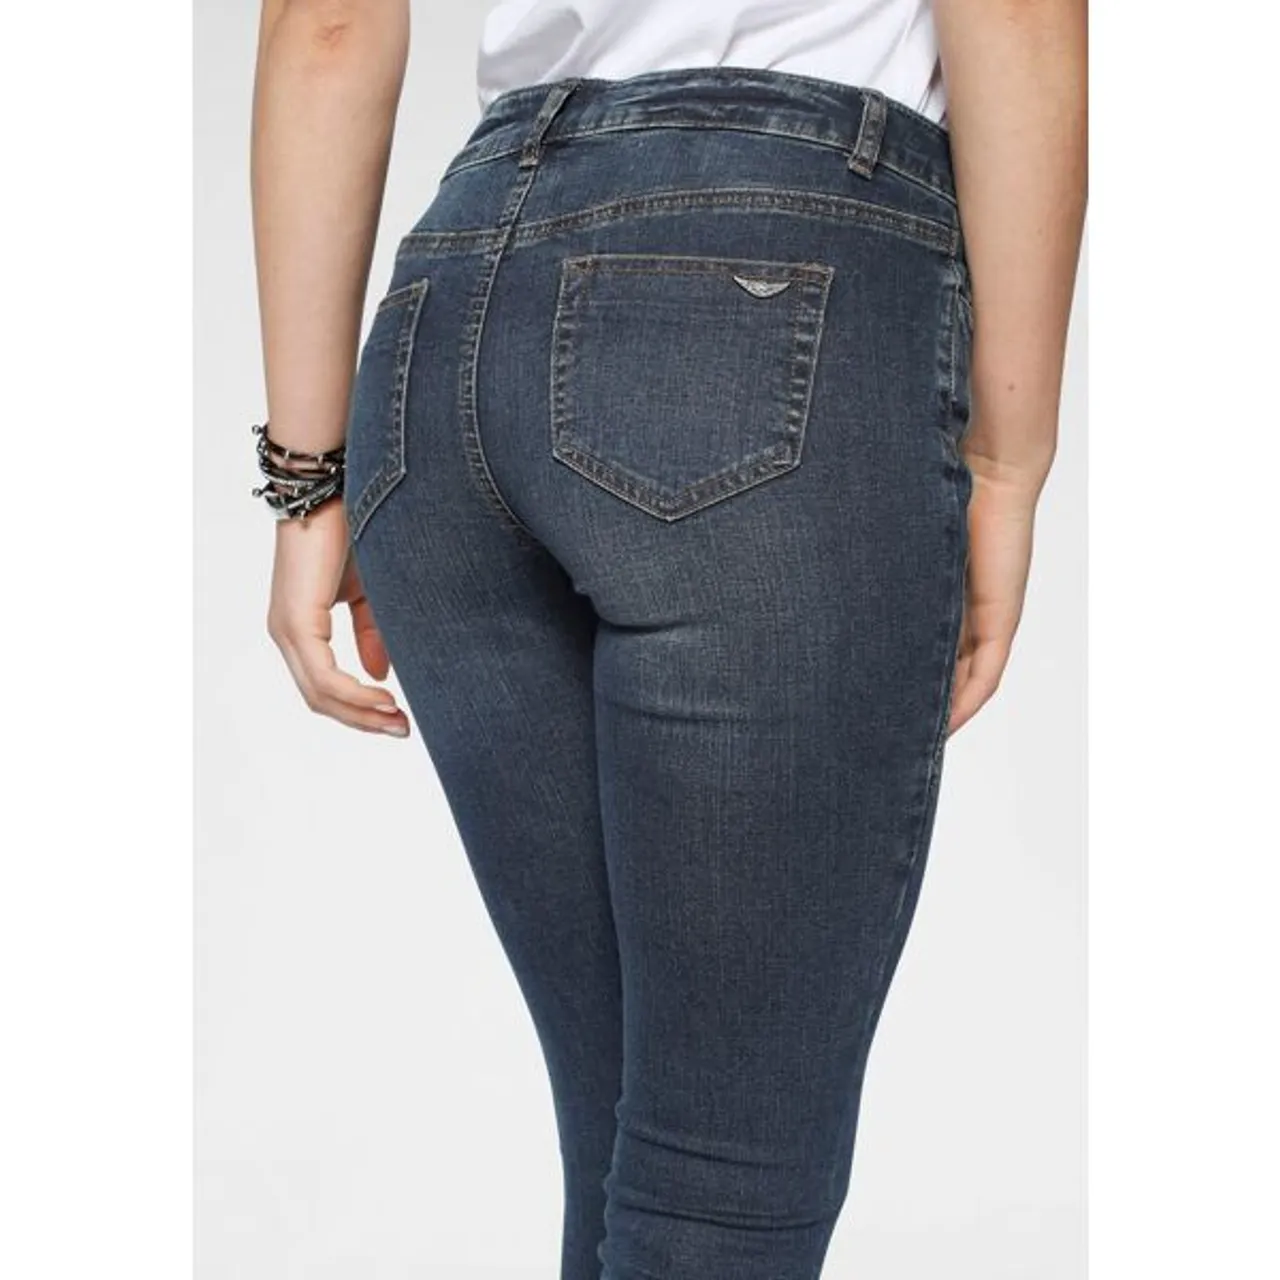 Skinny-fit-Jeans ARIZONA "mit Keileinsätzen" Gr. 21, K + L Gr, blau (darkblue, used) Damen Jeans Röhrenjeans